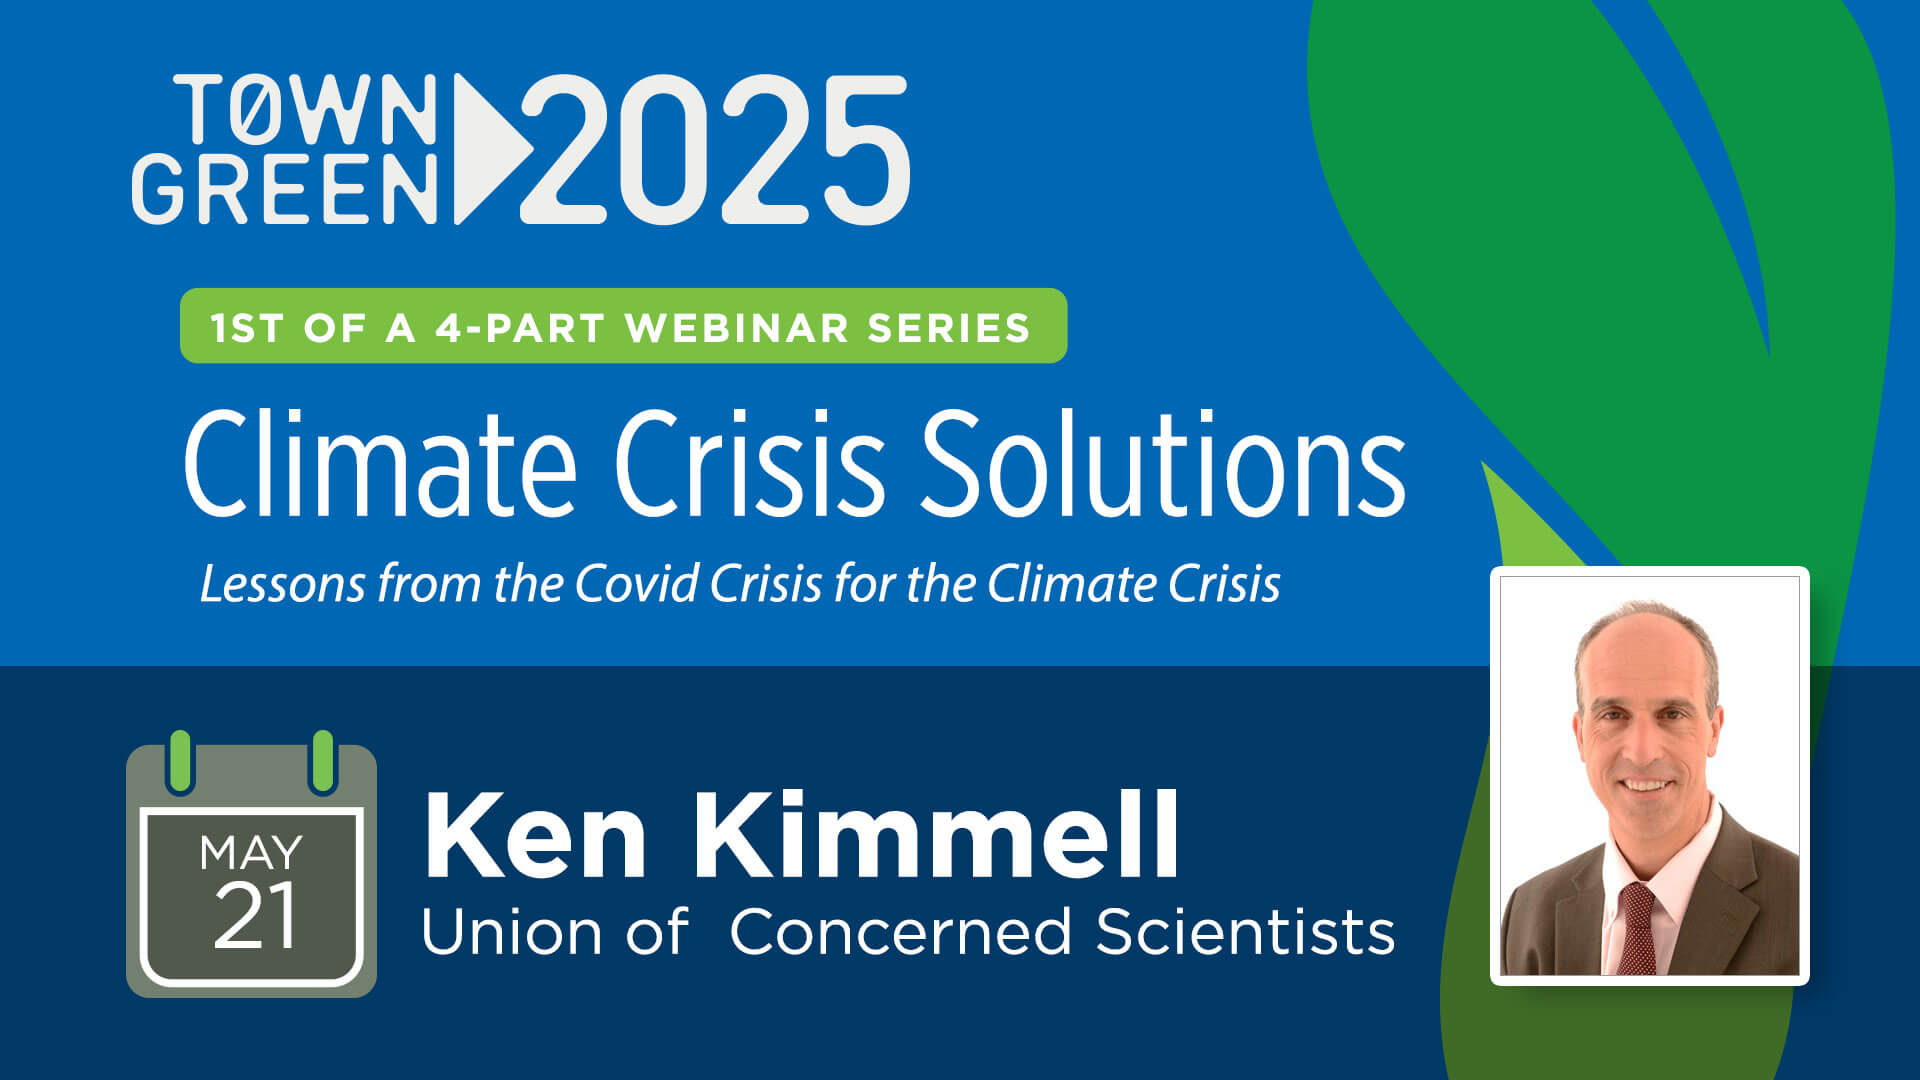 TownGreen2025 Climate Crisis Solutions: Ken Kimmell